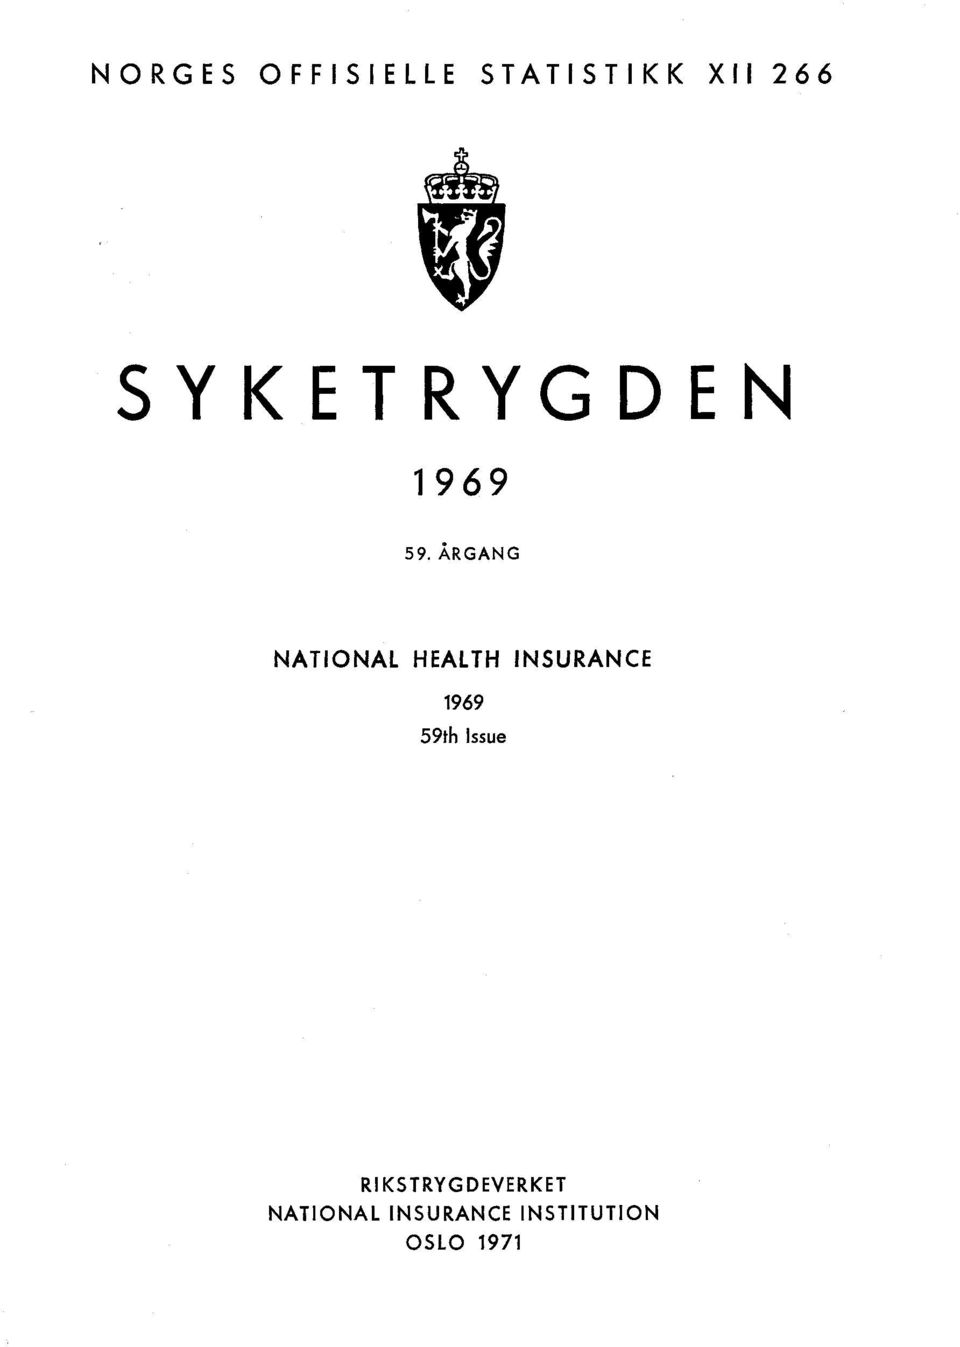 ÅRGANG NATIONAL HEALTH INSURANCE 1969